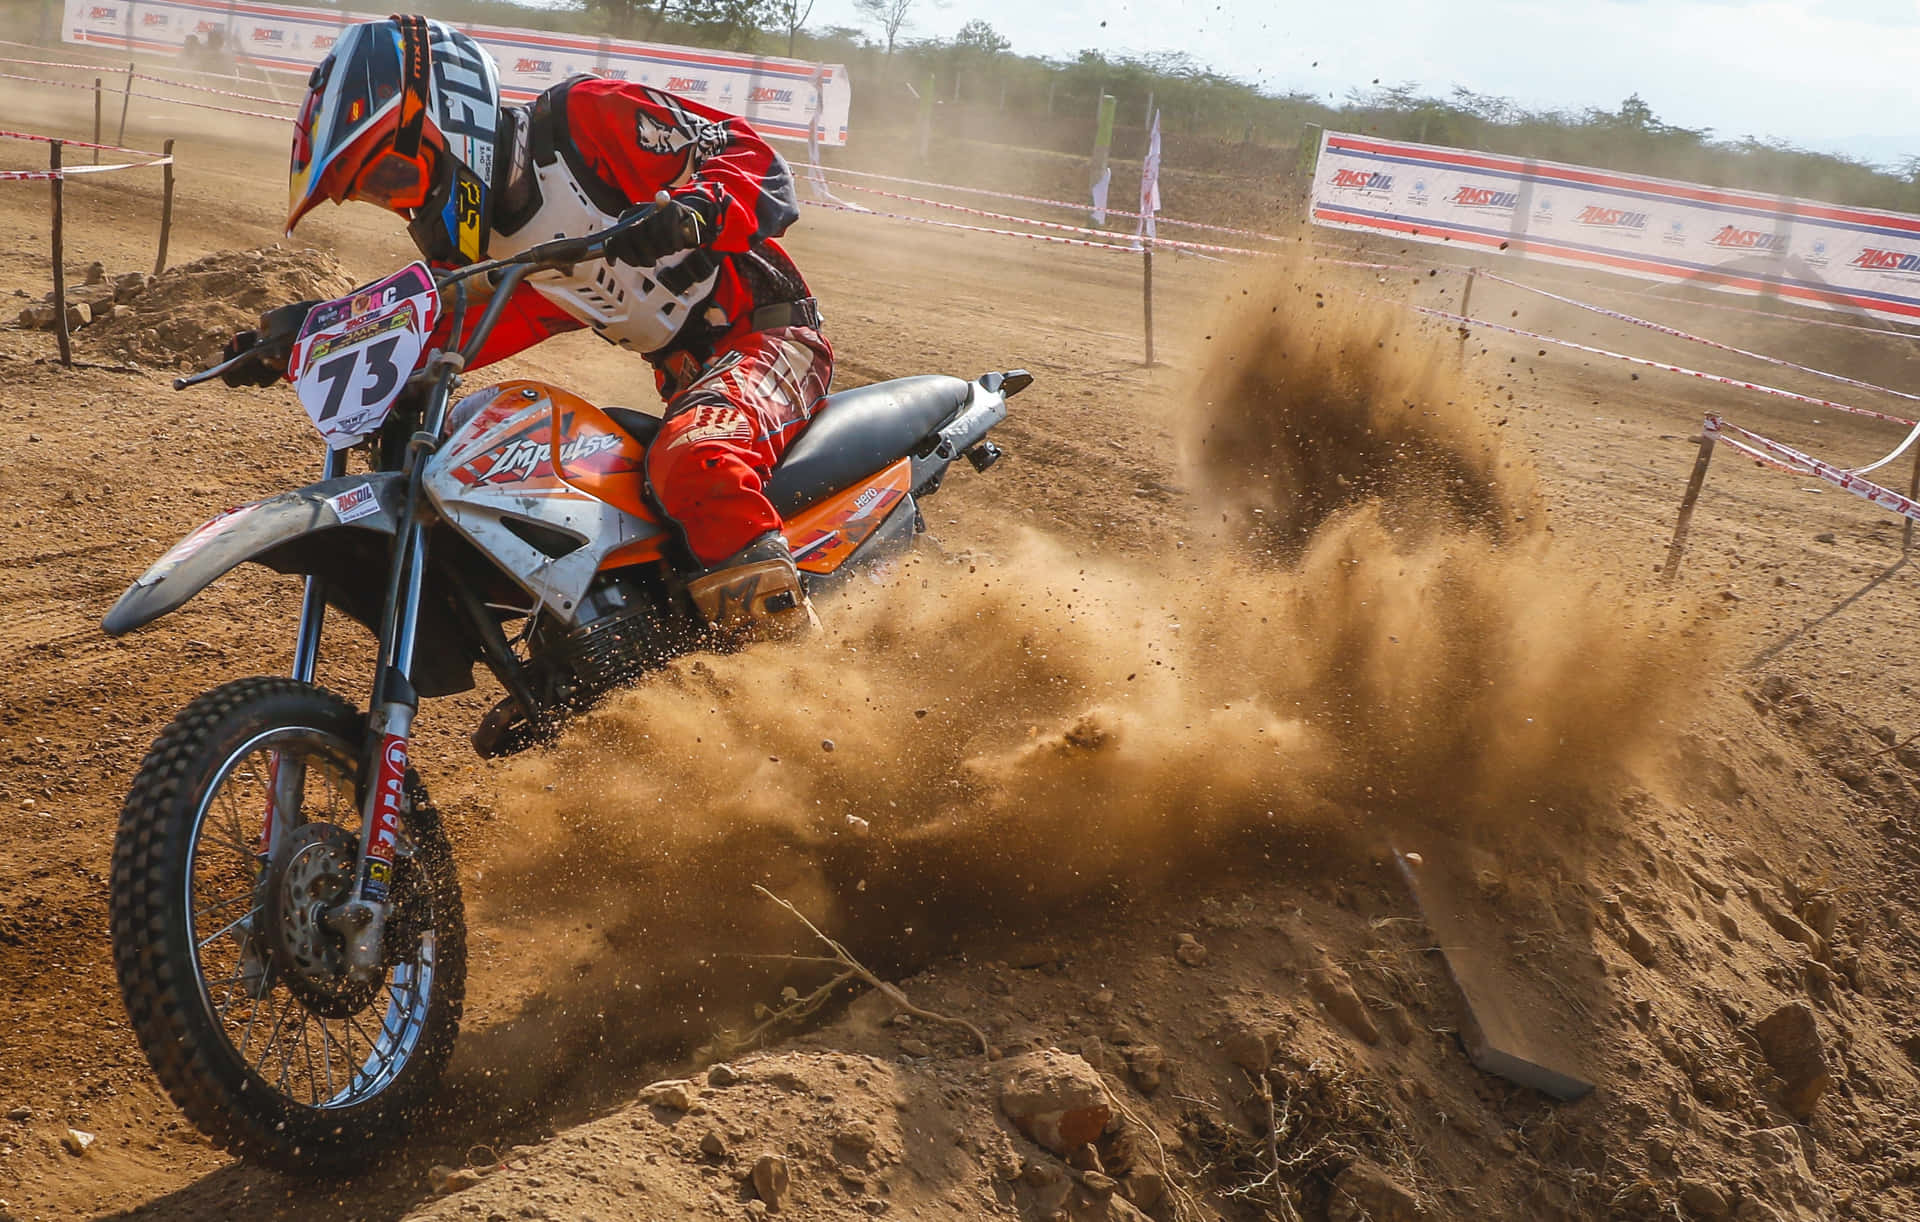 "Dirt Bike Rider Mid-jump on a Motocross Track"